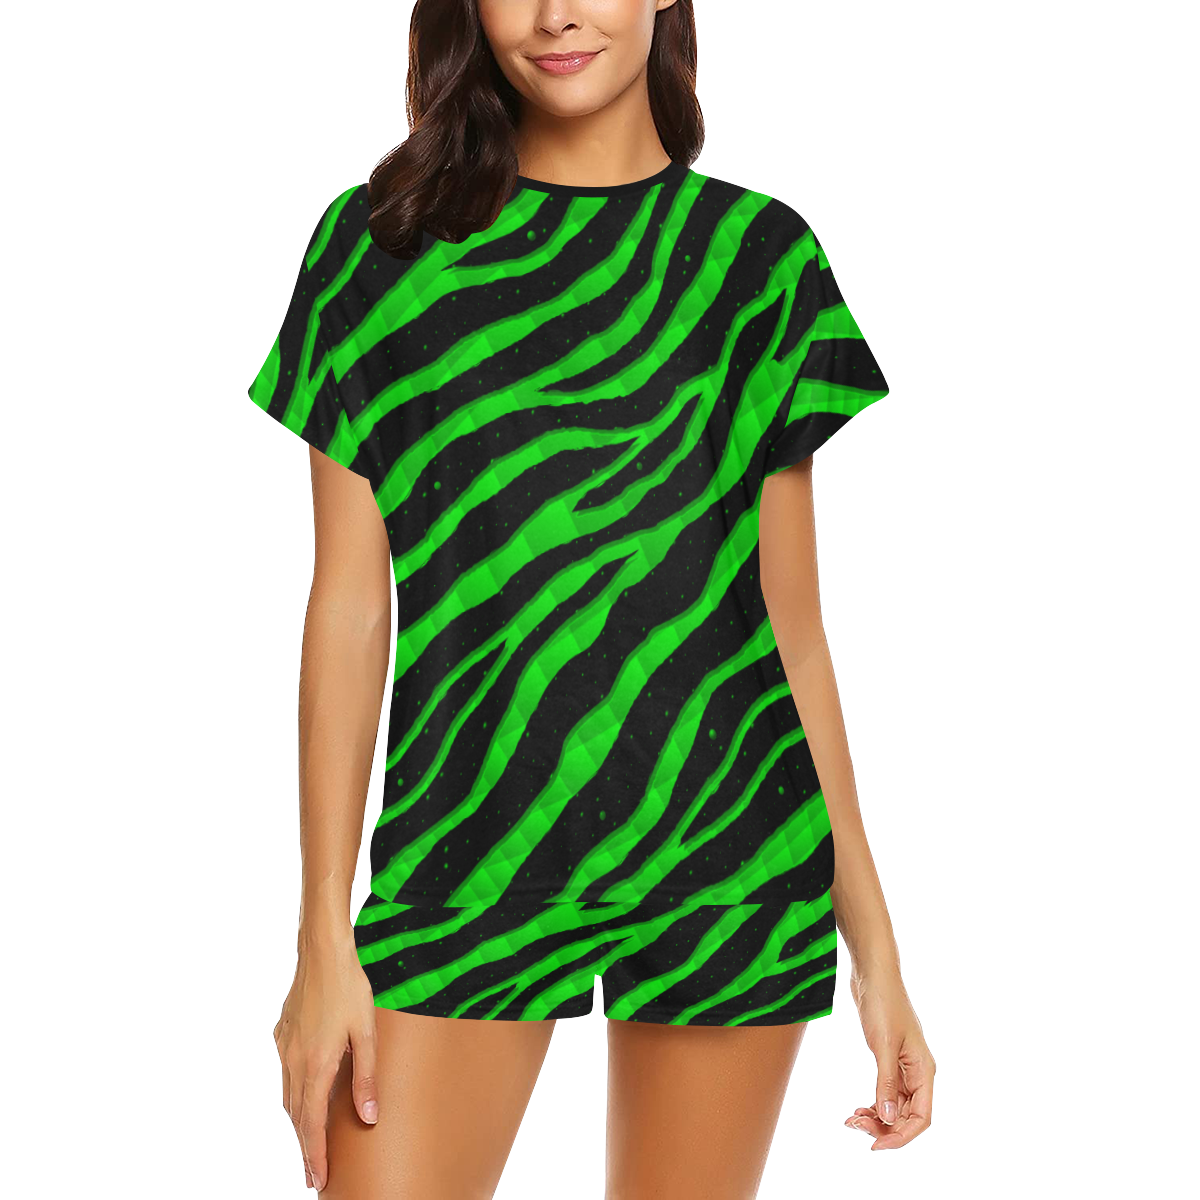 Ripped SpaceTime Stripes - Green Women's Short Pajama Set